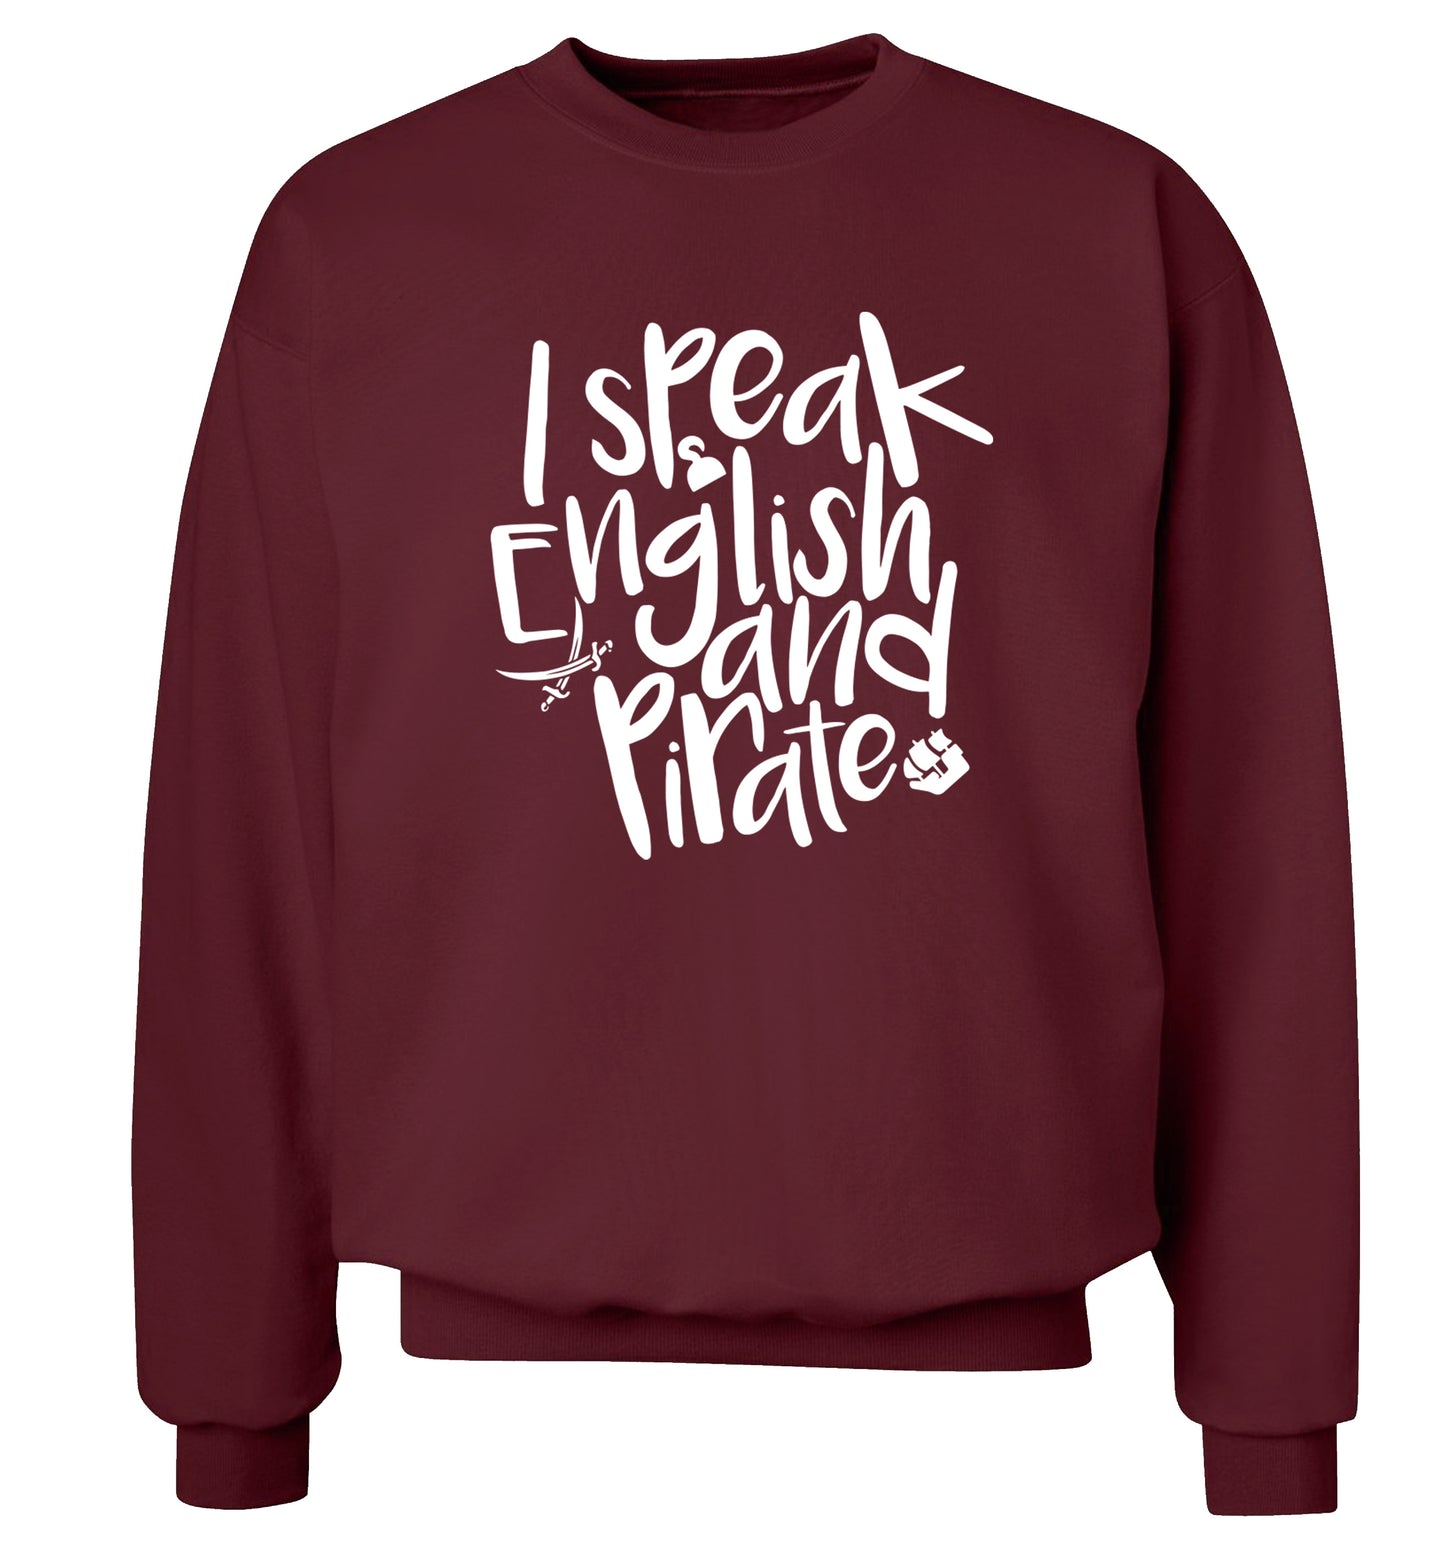 I speak English and pirate Adult's unisex maroon Sweater 2XL